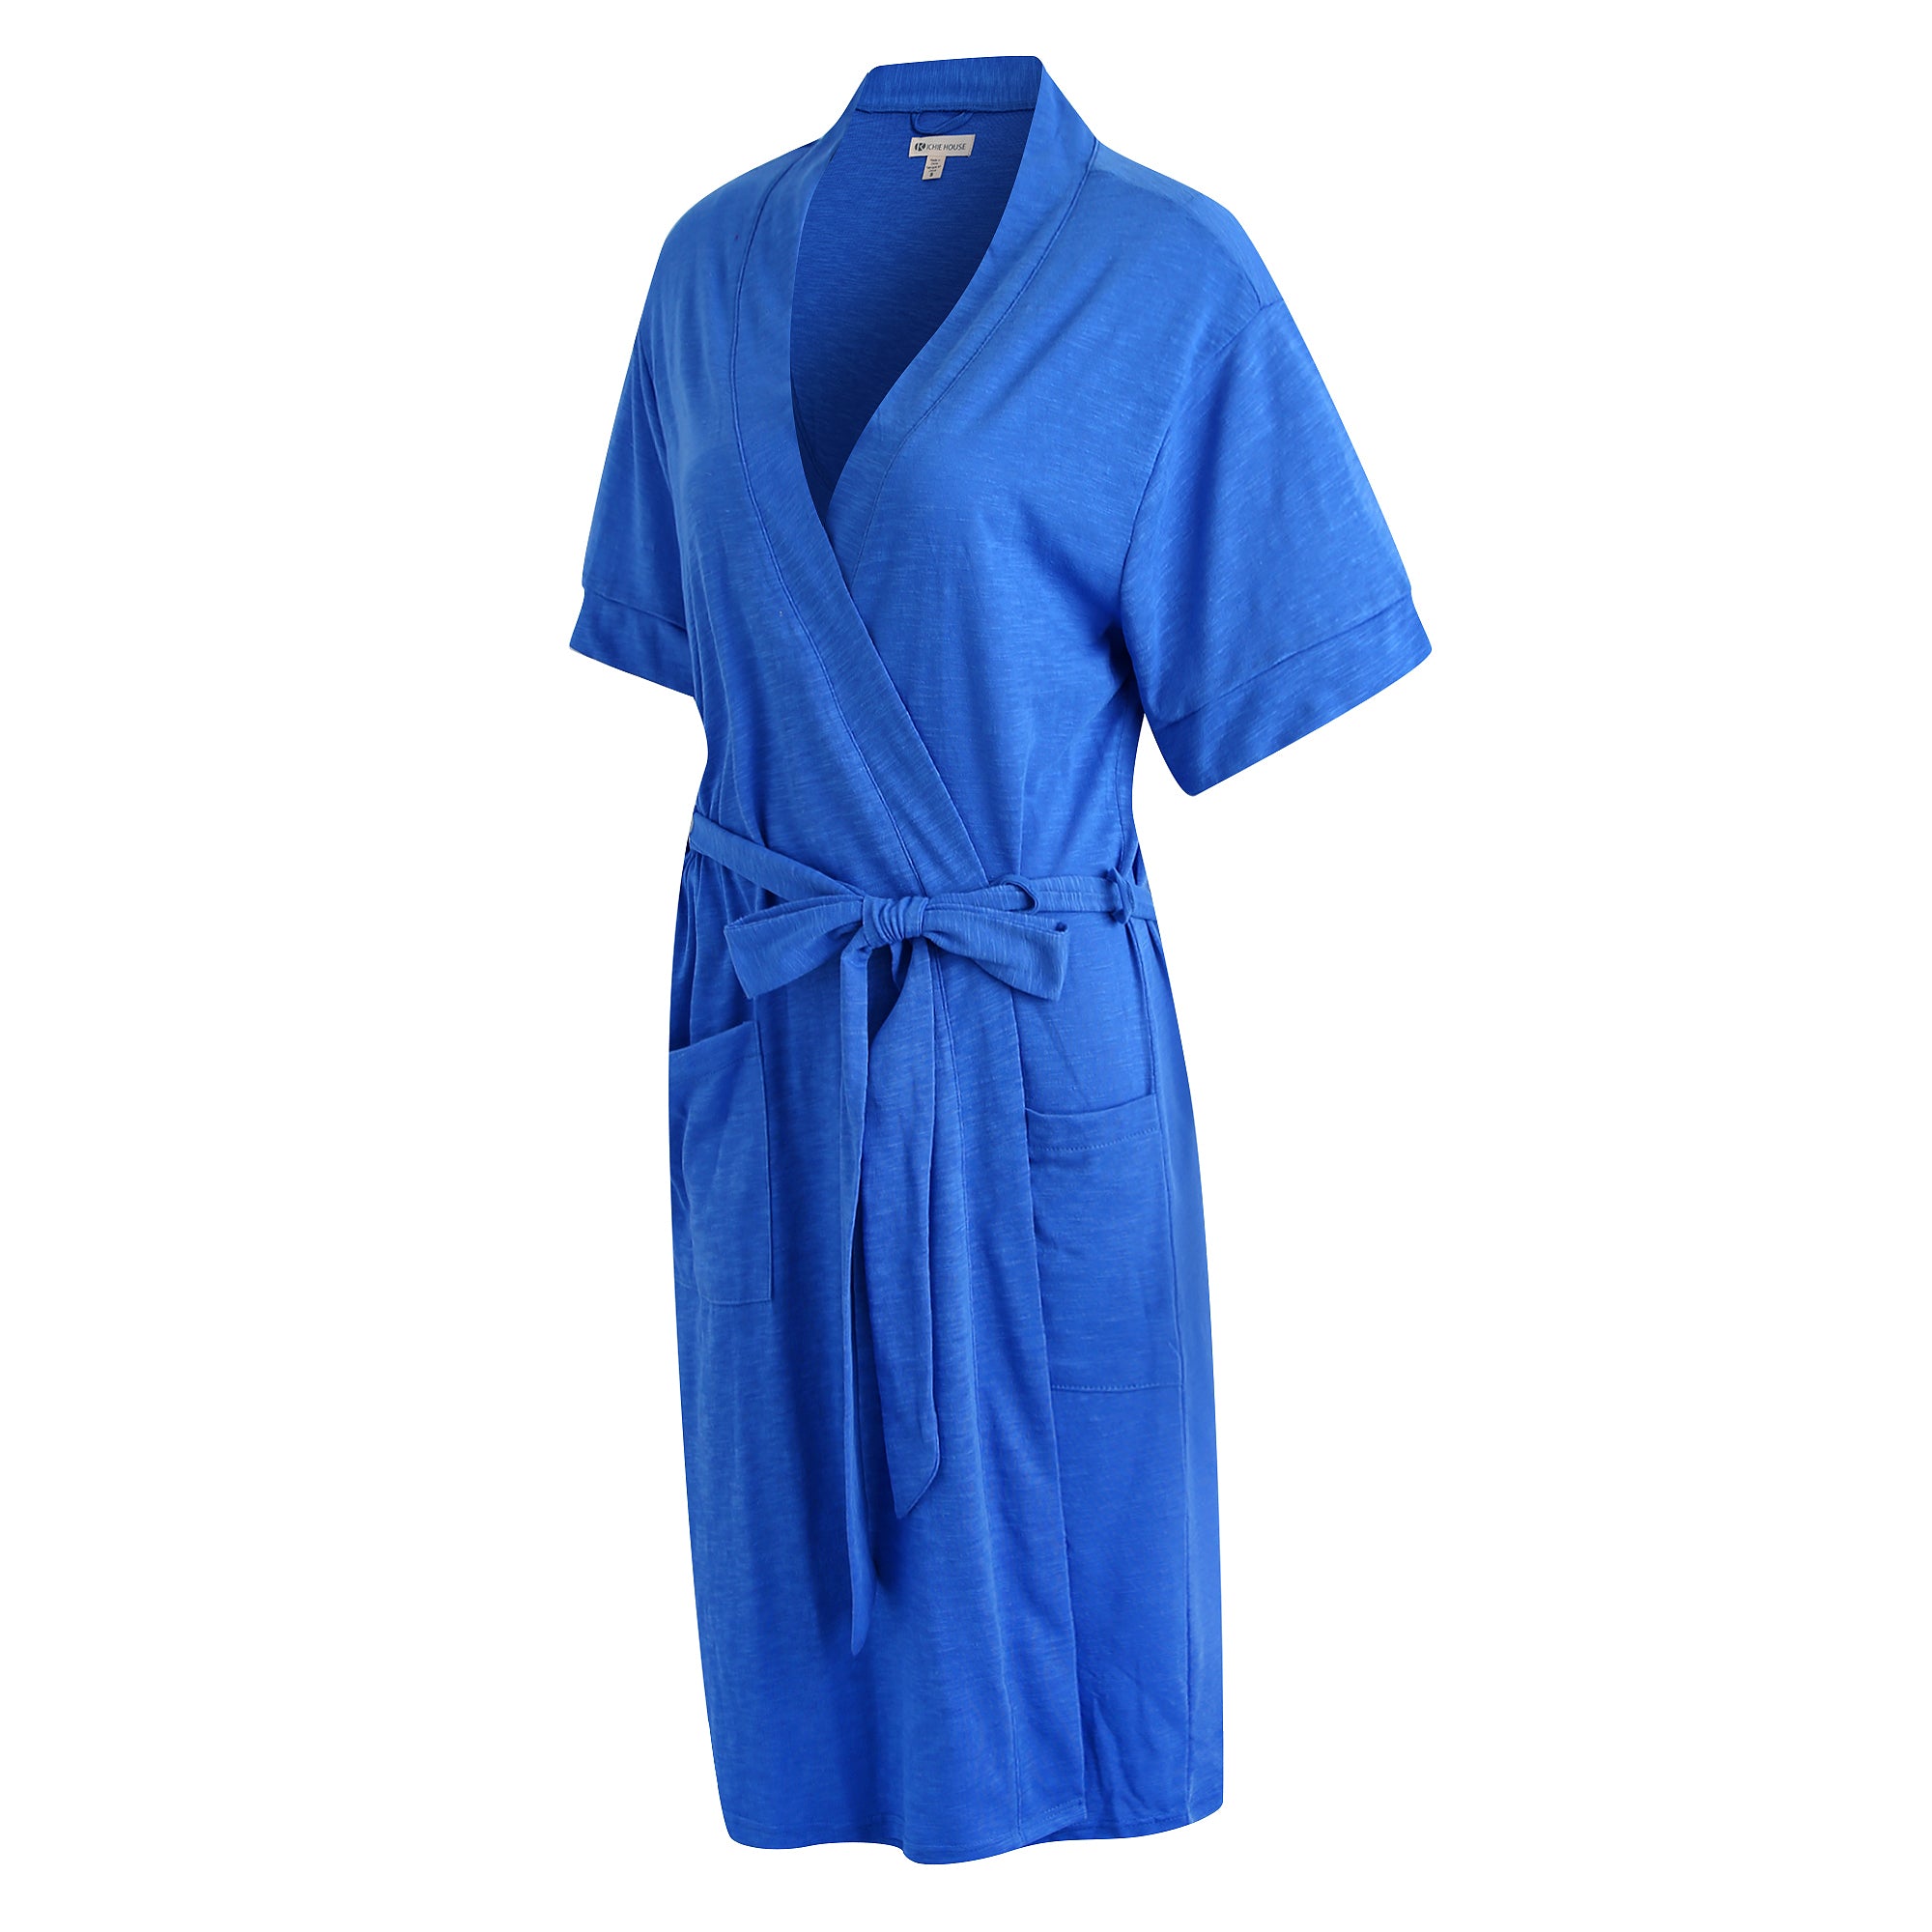 RH Robe Women's Short Sleeve Kimono Cotton Bathrobe Dressing Gown